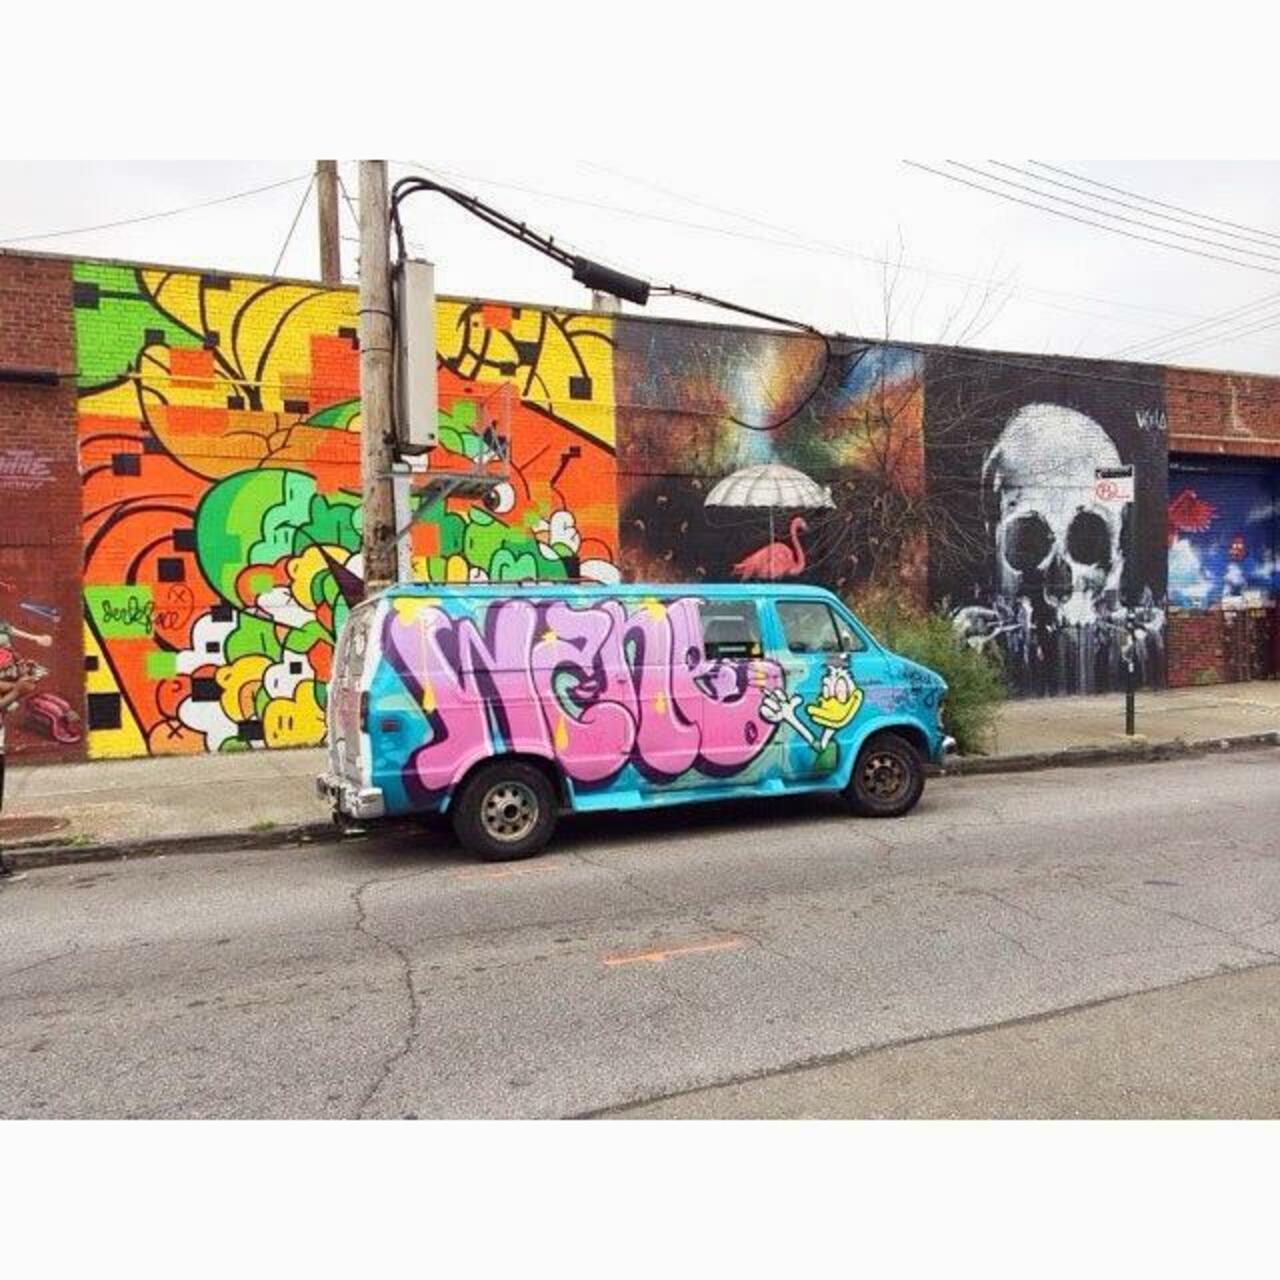 RT @False_Prophet__: I saw this van in #brooklyn . Does anyone know of the #artist ? #streetart #graffiti http://t.co/JiNXaTfGdI